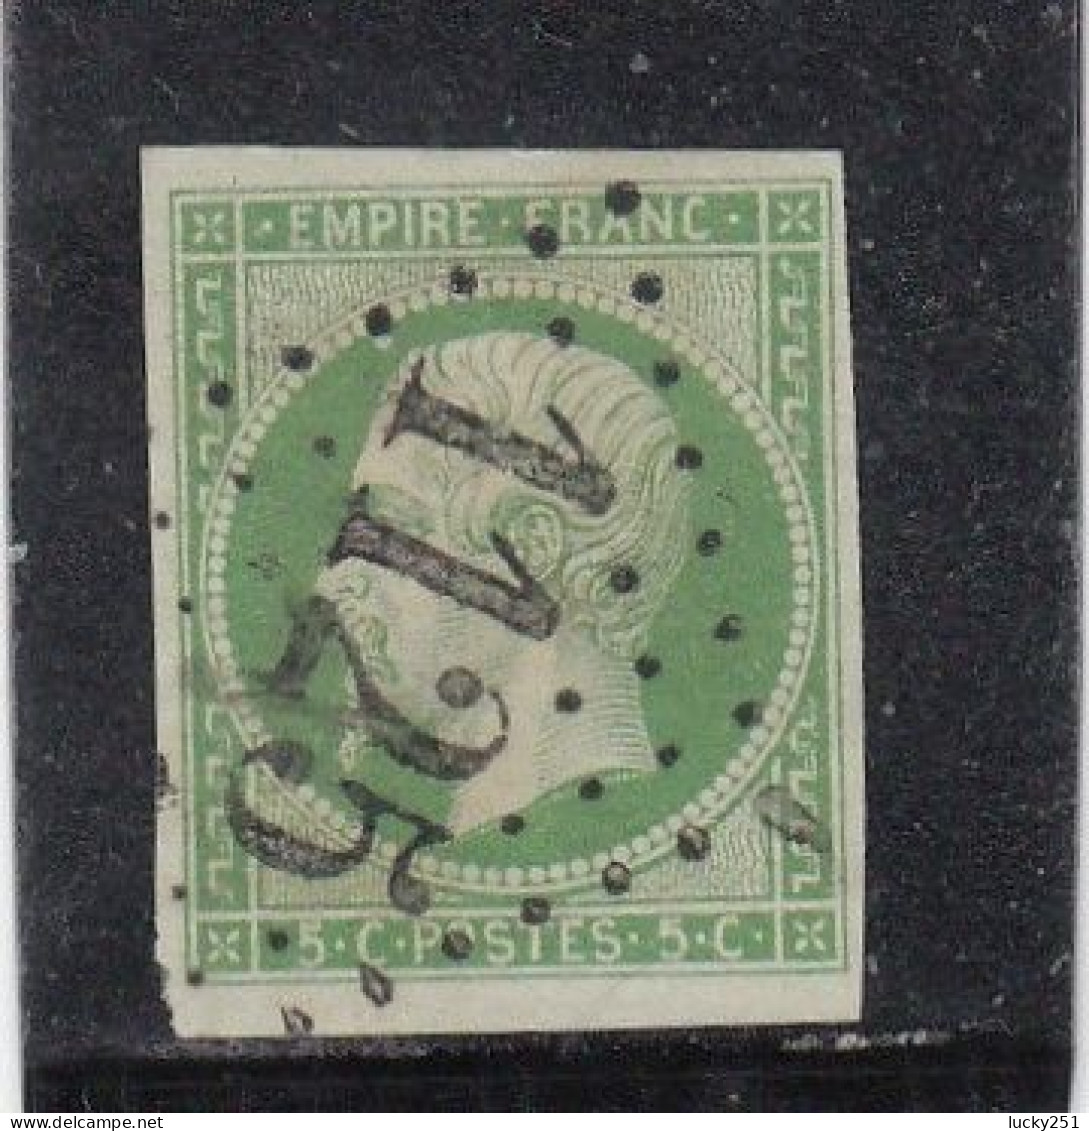 France - Année 1853-62 - N°YT N° 12 - 5c Vert - Empire - Oblitération GC - 1853-1860 Napoléon III.